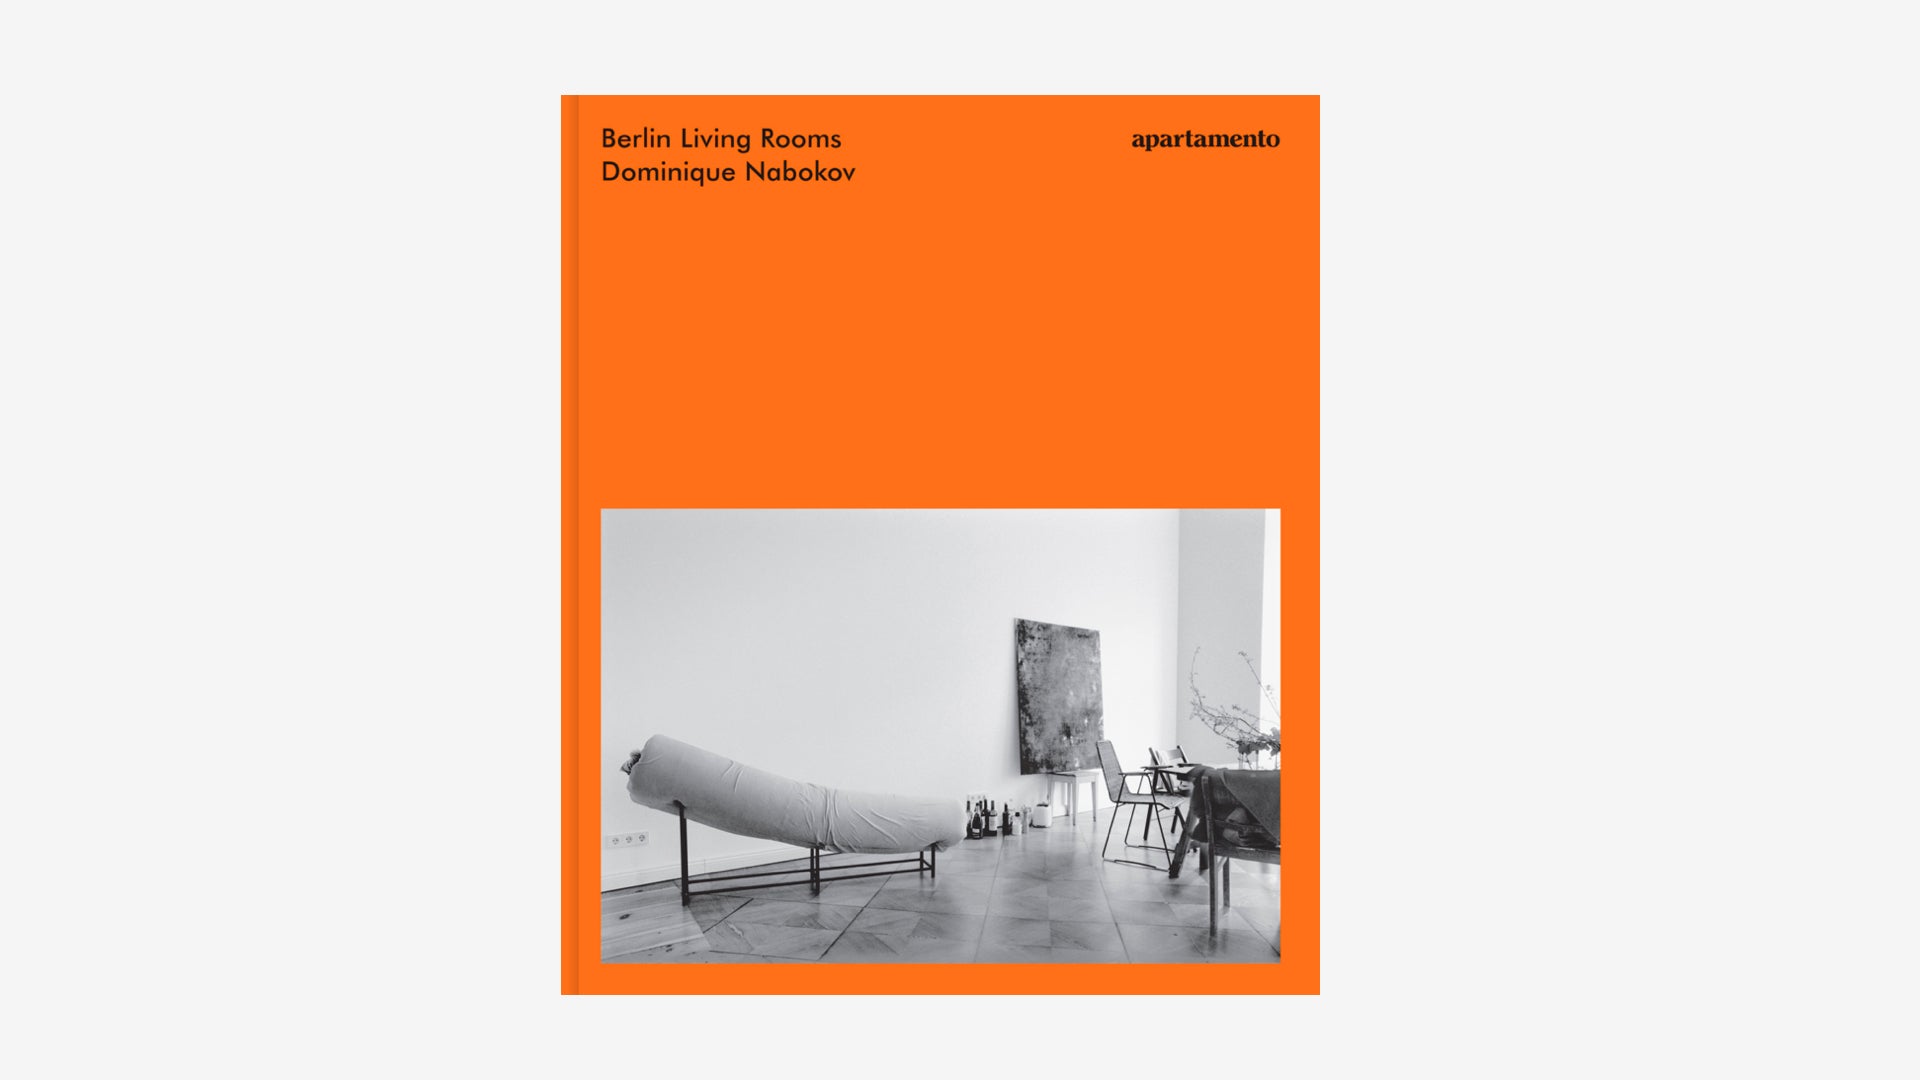 berlin-living-rooms-dominique-nabokov-apartamento-books-01